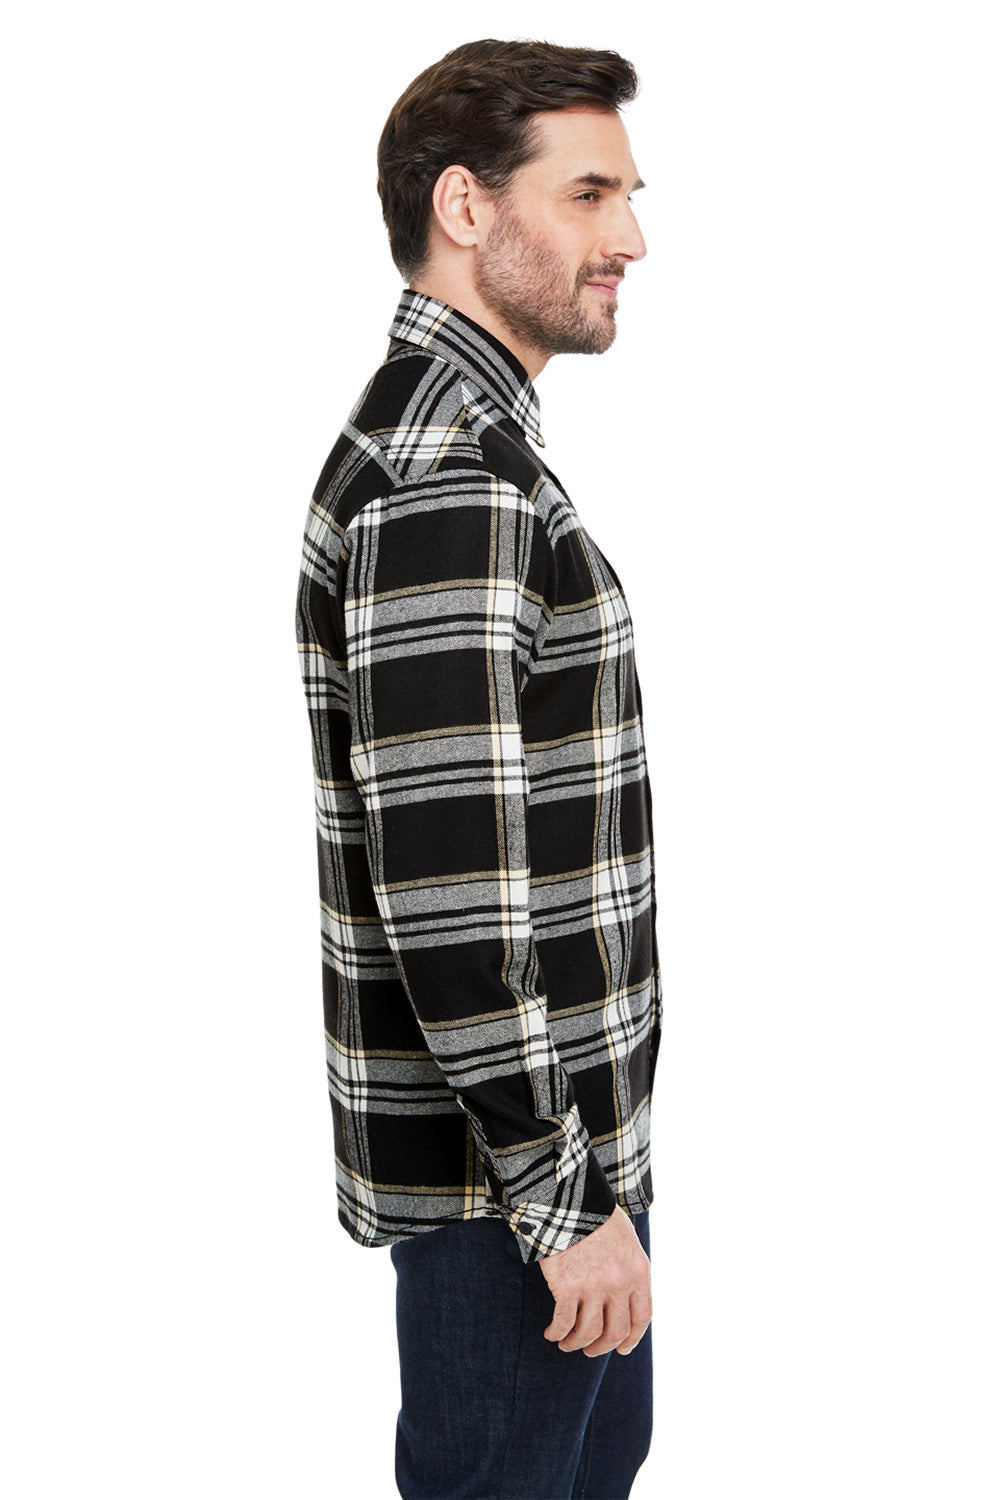 Burnside B8212 Mens Flannel Long Sleeve Button Down Shirt w/ Pocket Black/Ecru Model Side